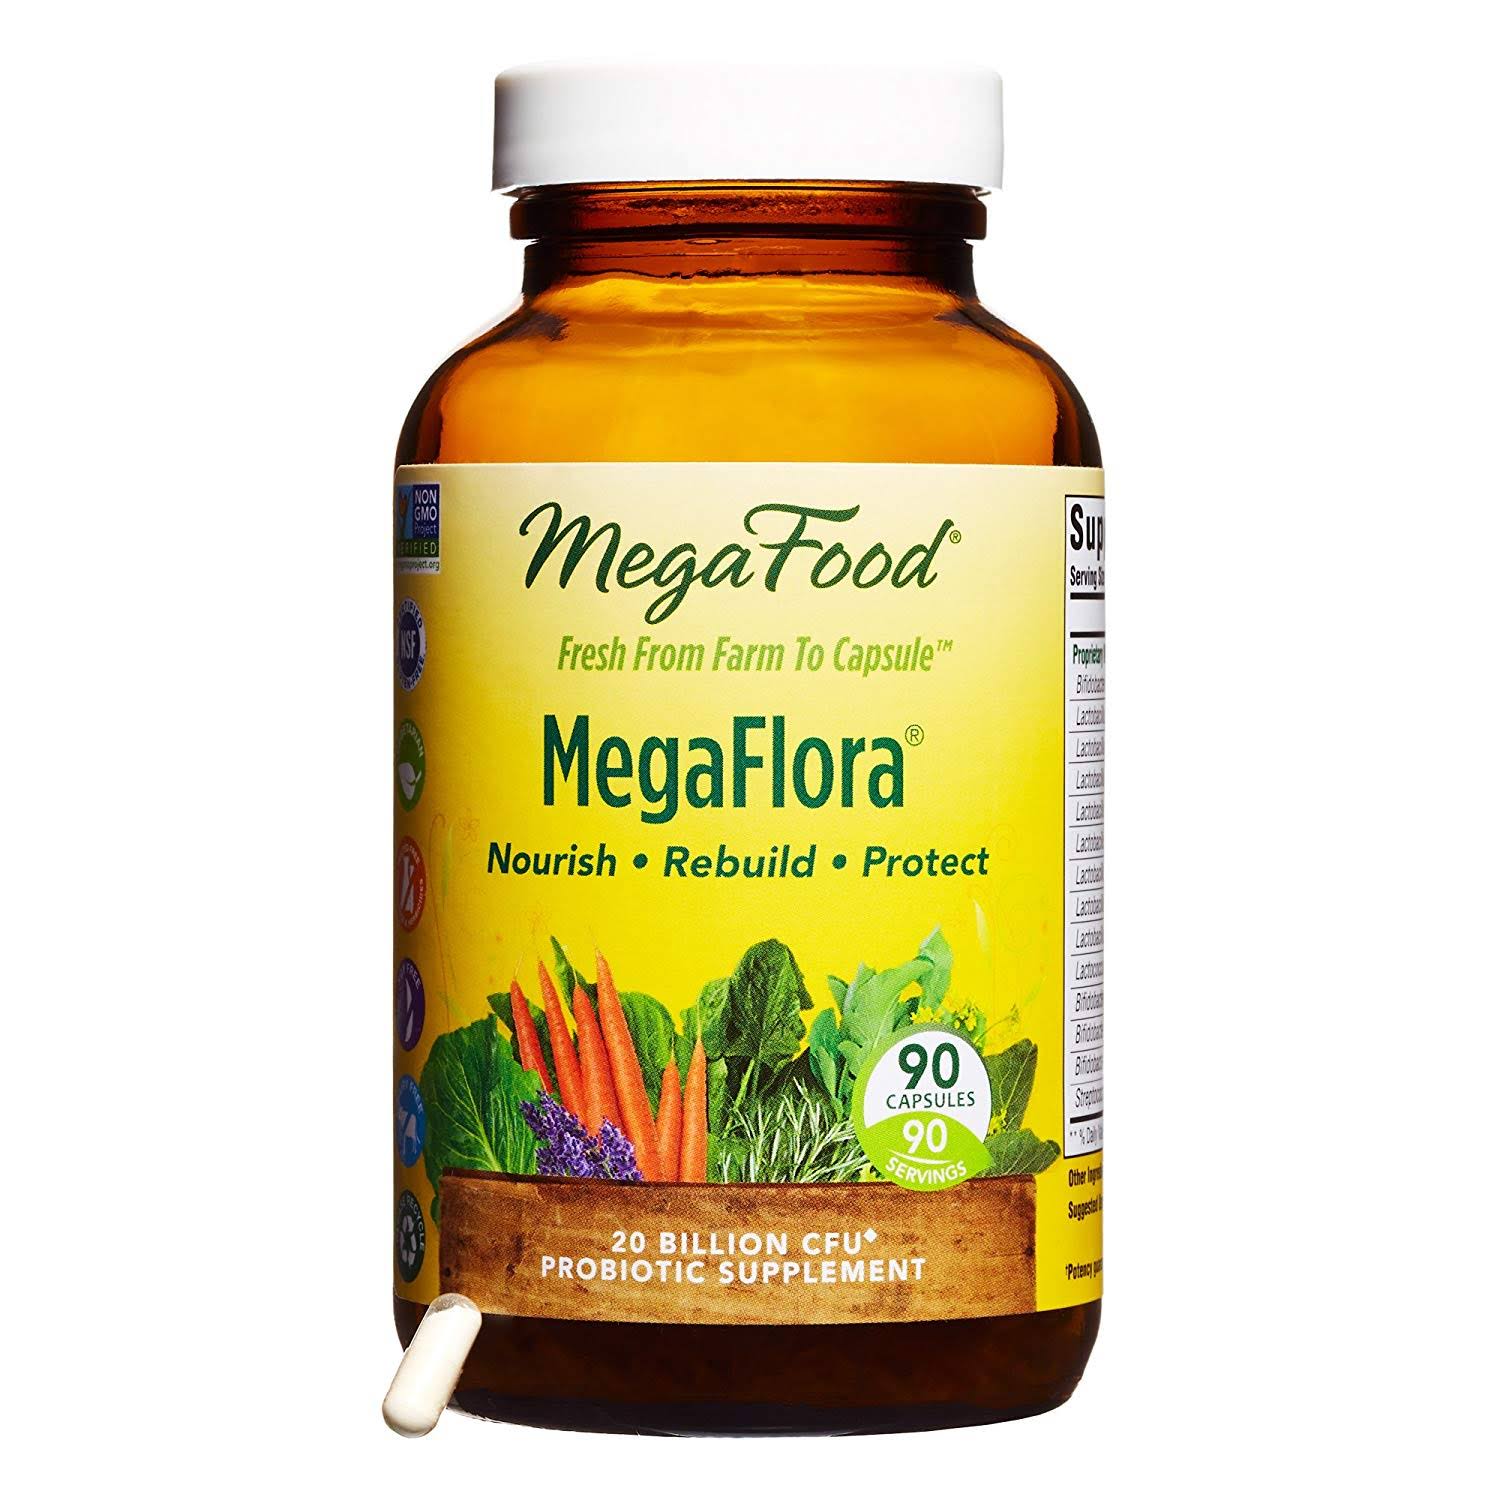 MegaFood MegaFlora Probiotic Supplement - 90 Capsules